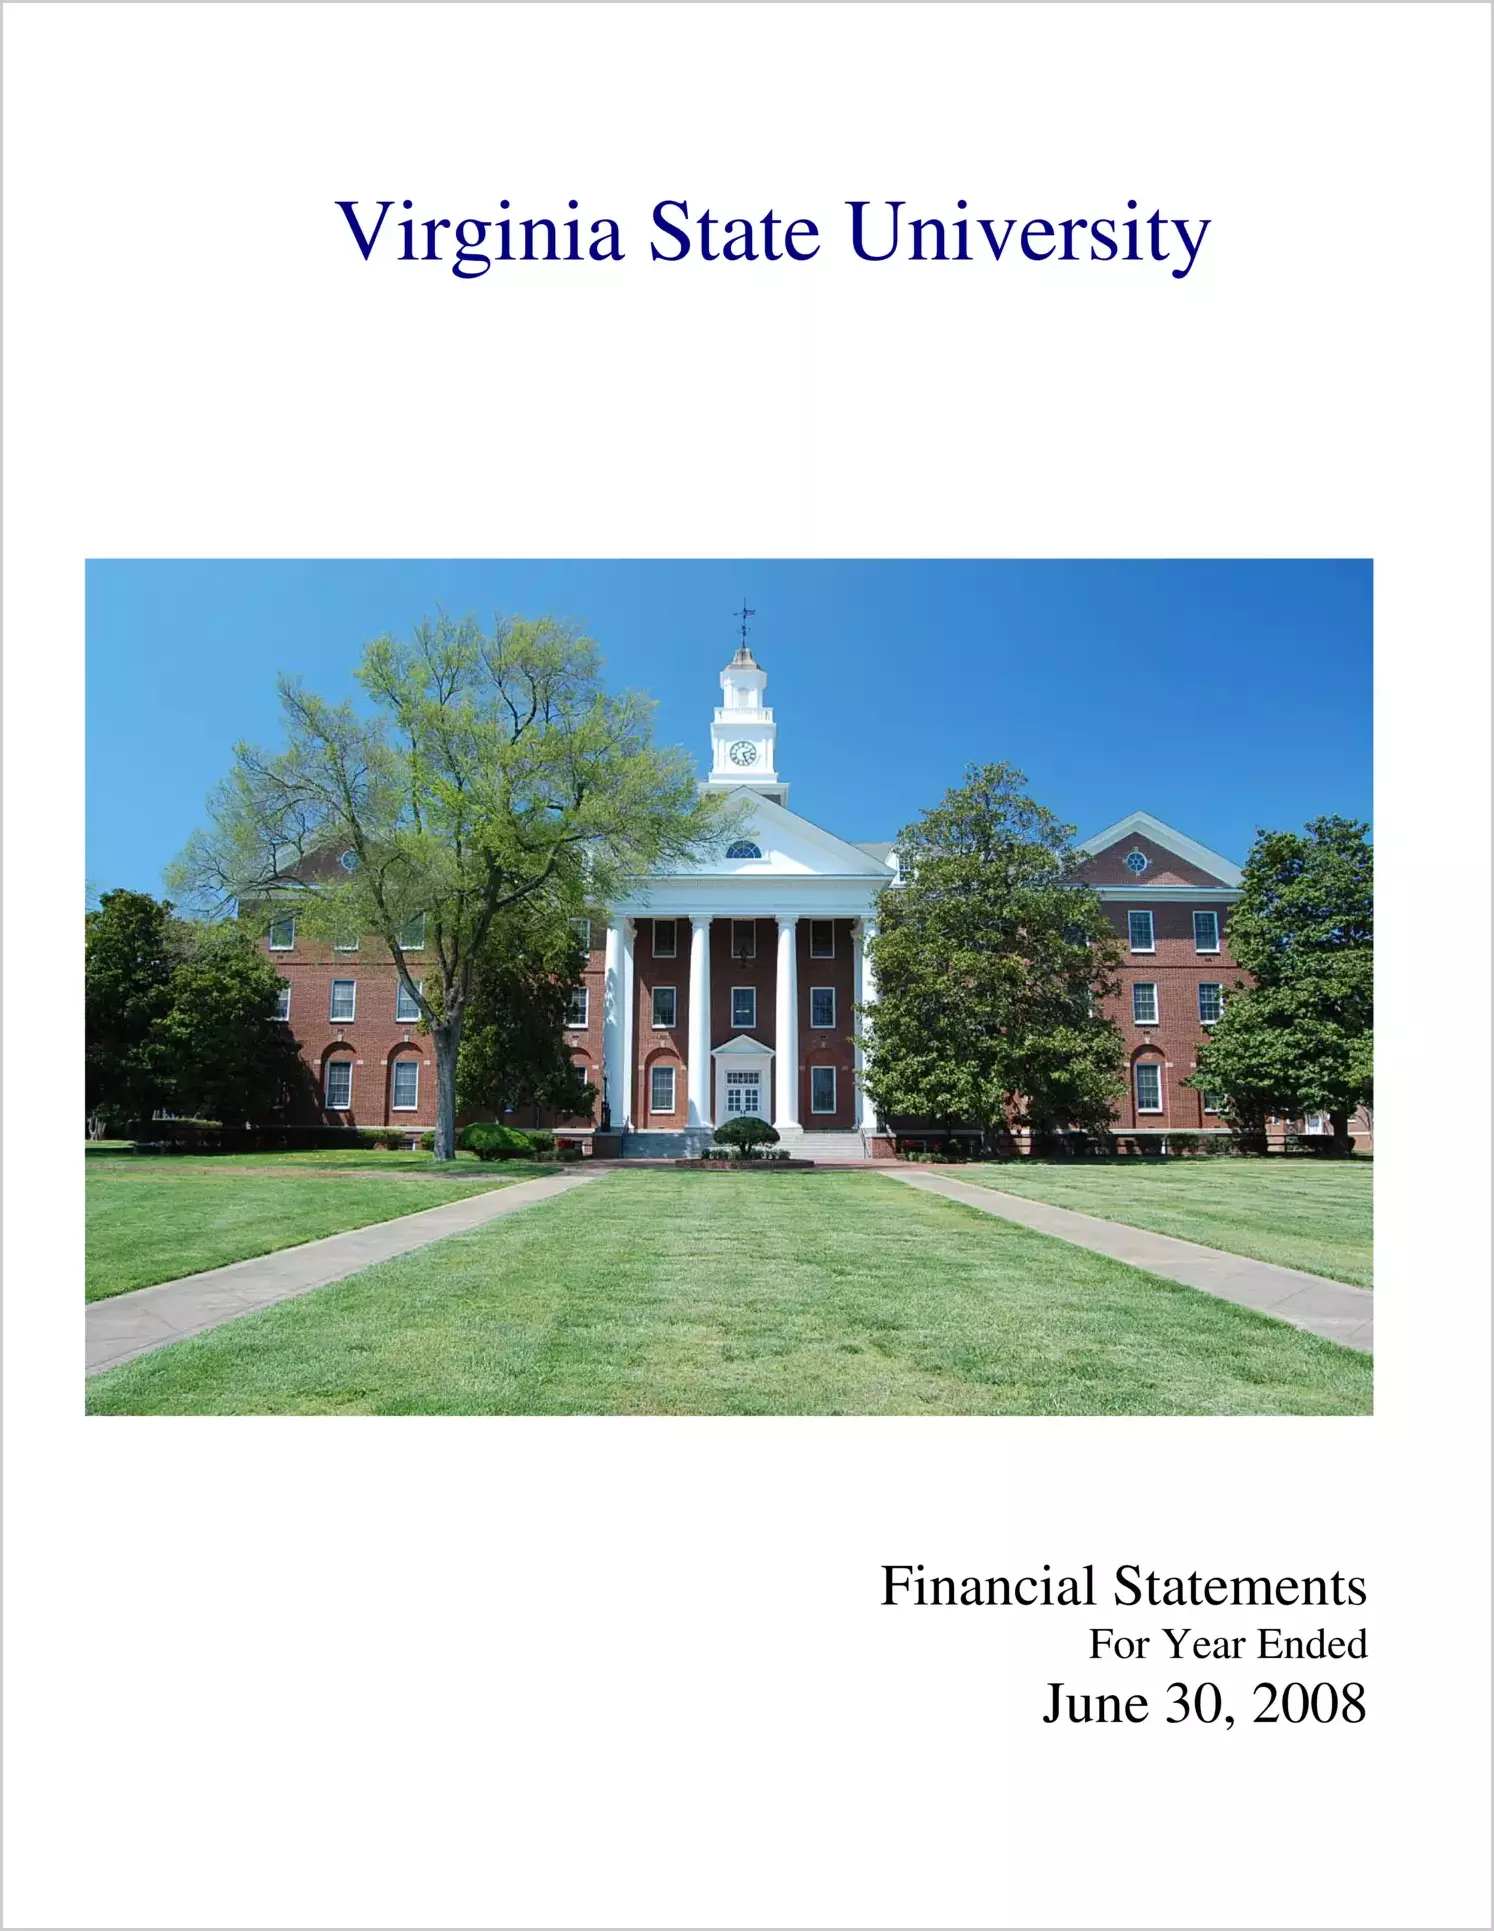 Virginia State University Financial Report 2008